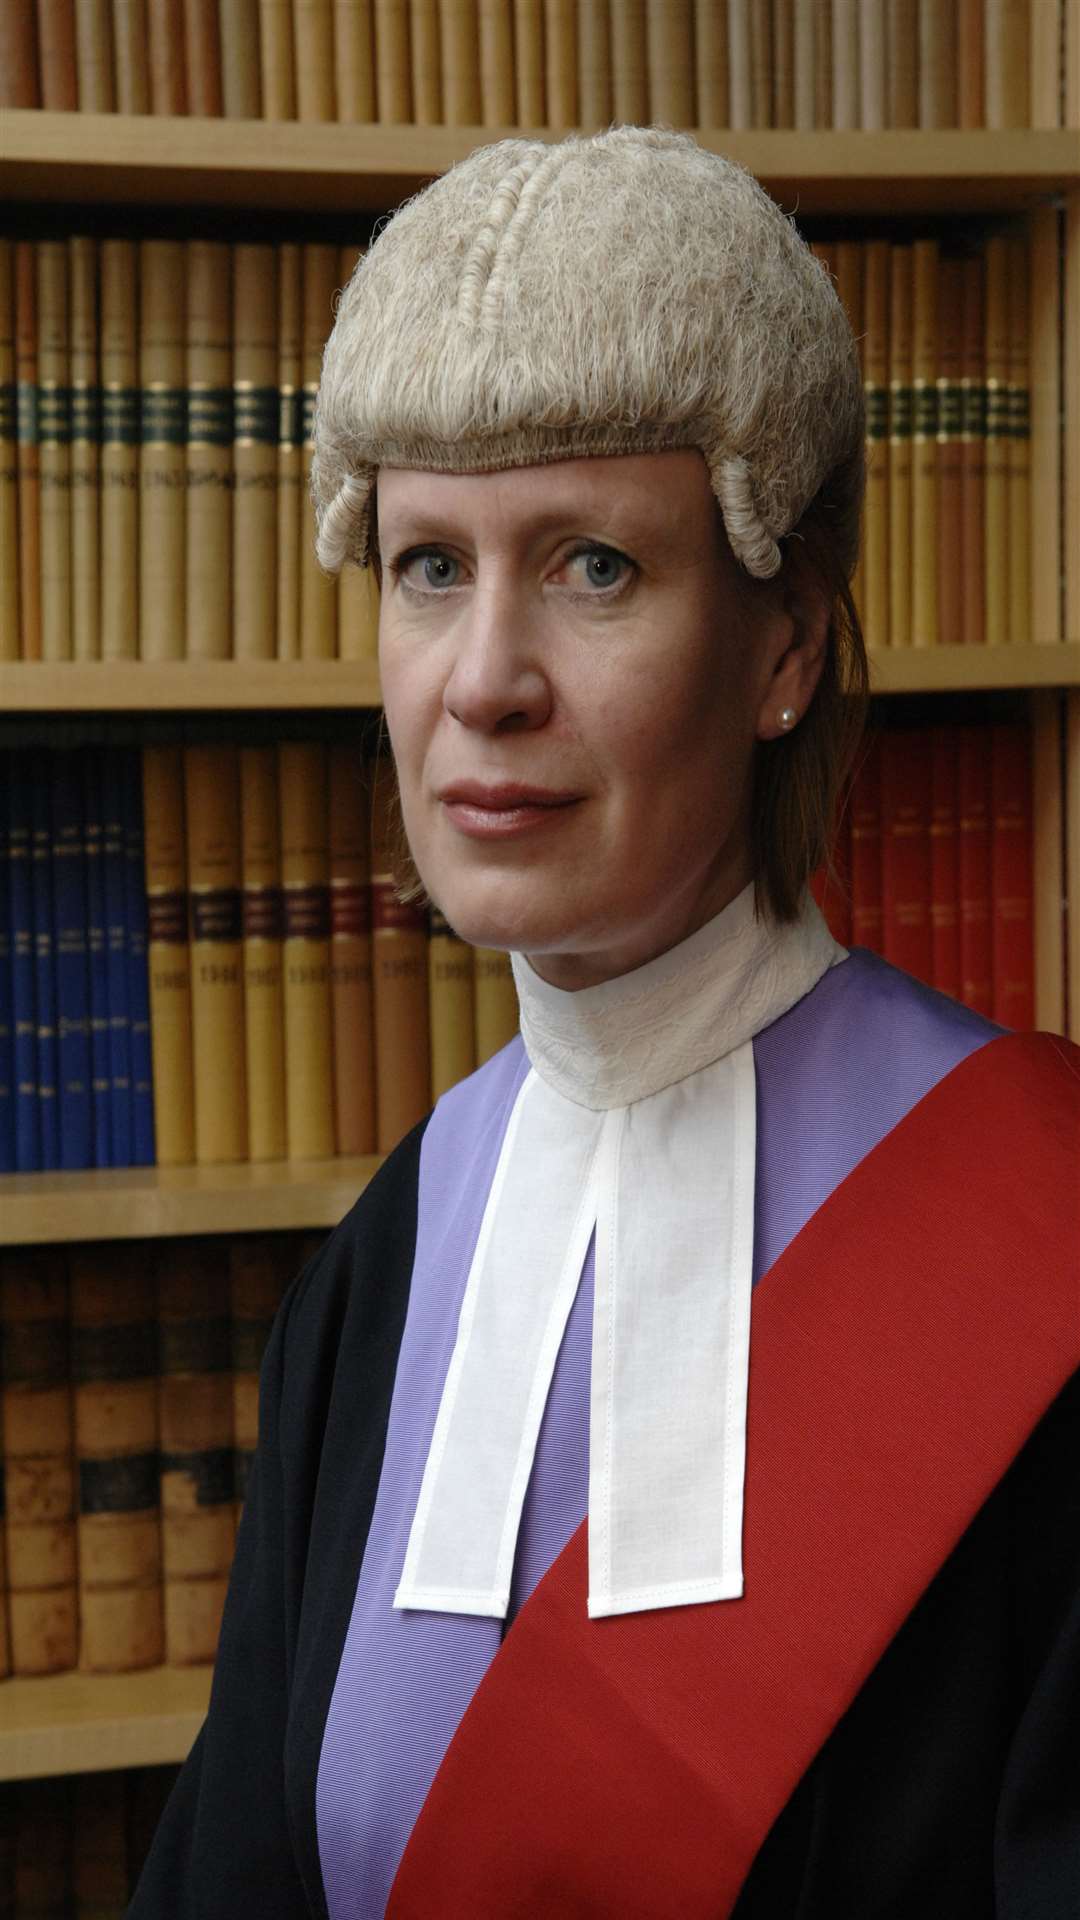 Judge Heather Norton